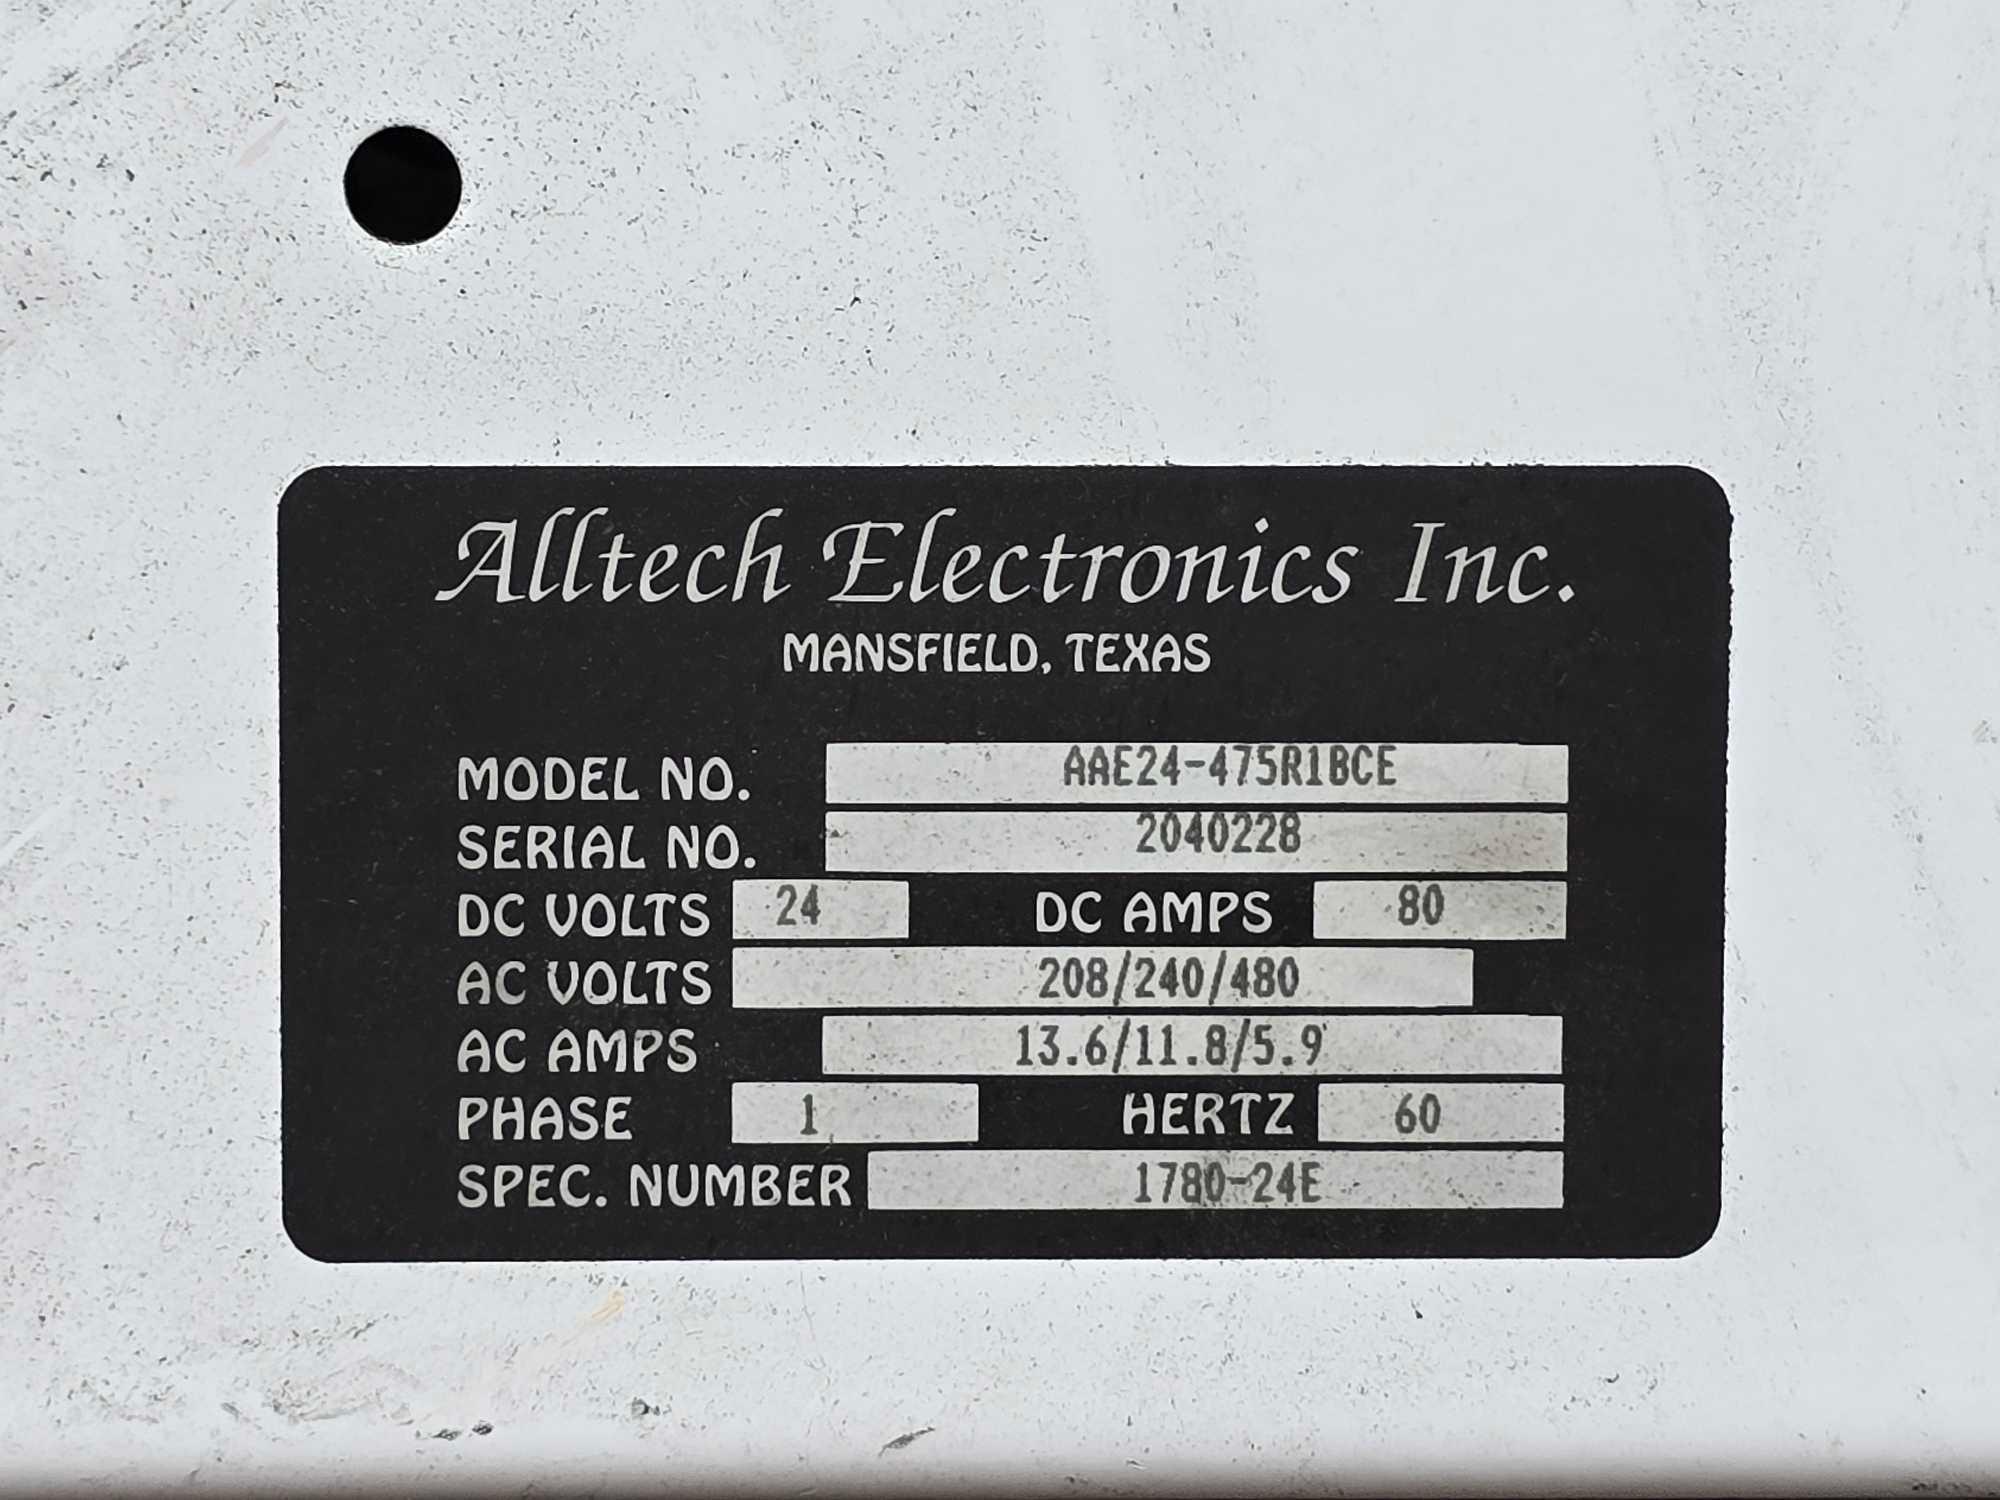 Alltech Electronics 24 Volt AAE24-475R1BCE Battery Charger